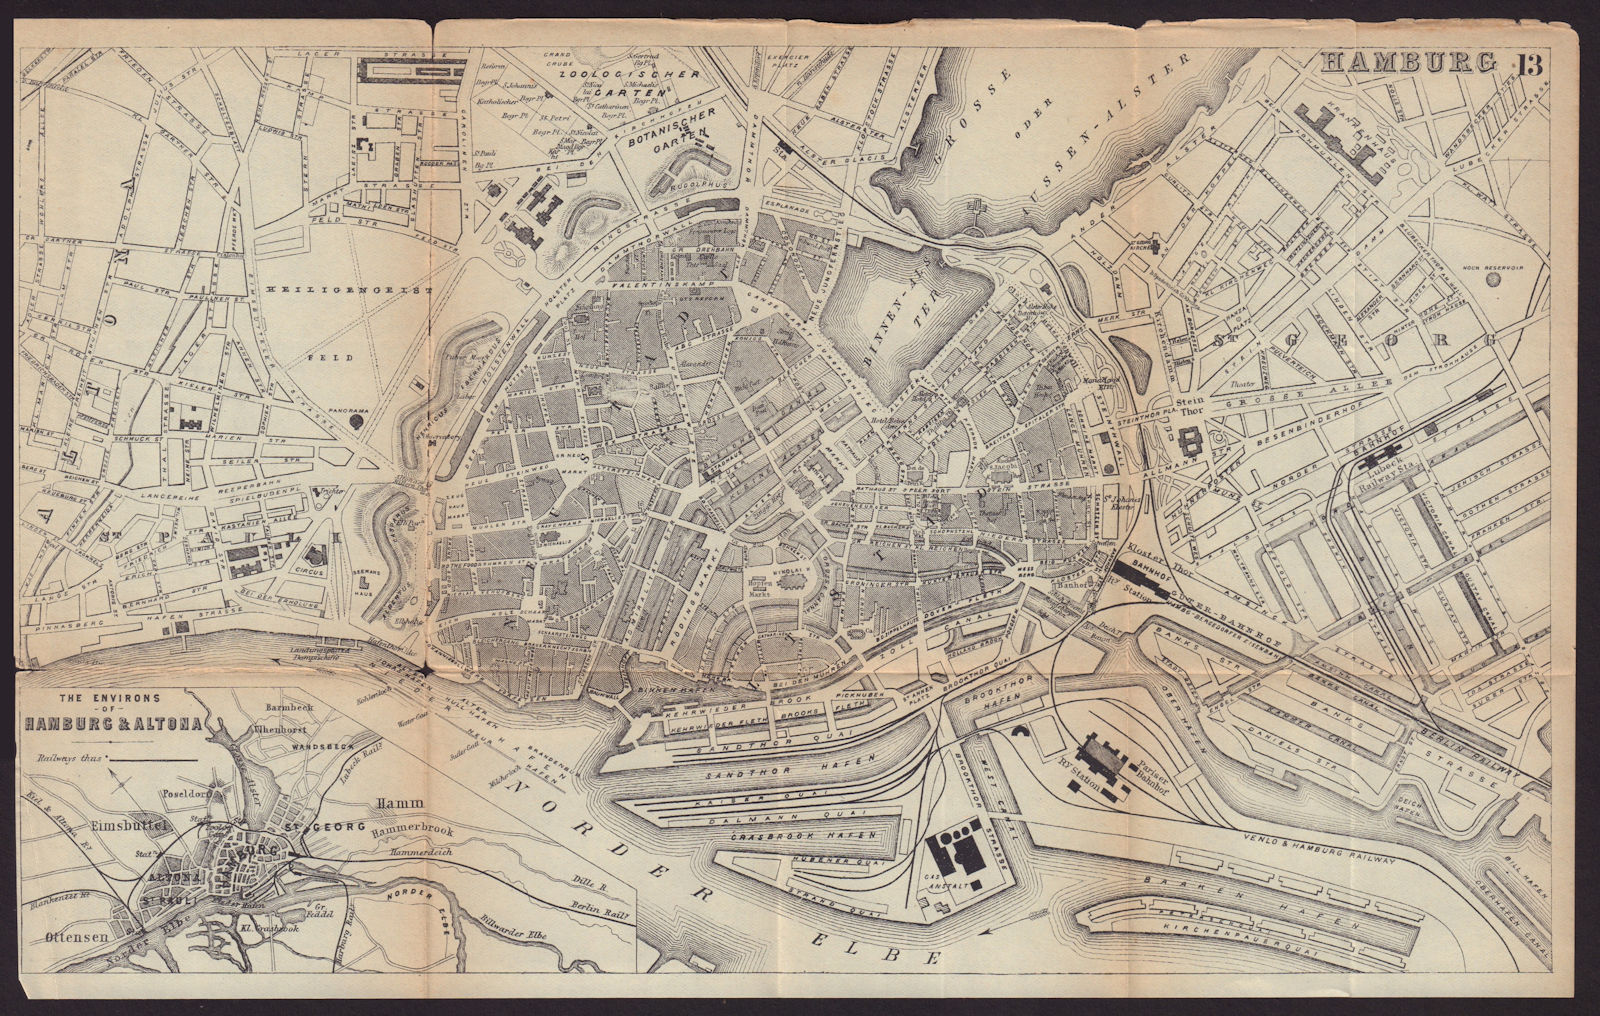 Associate Product HAMBURG antique town plan city map. Germany. BRADSHAW c1898 old